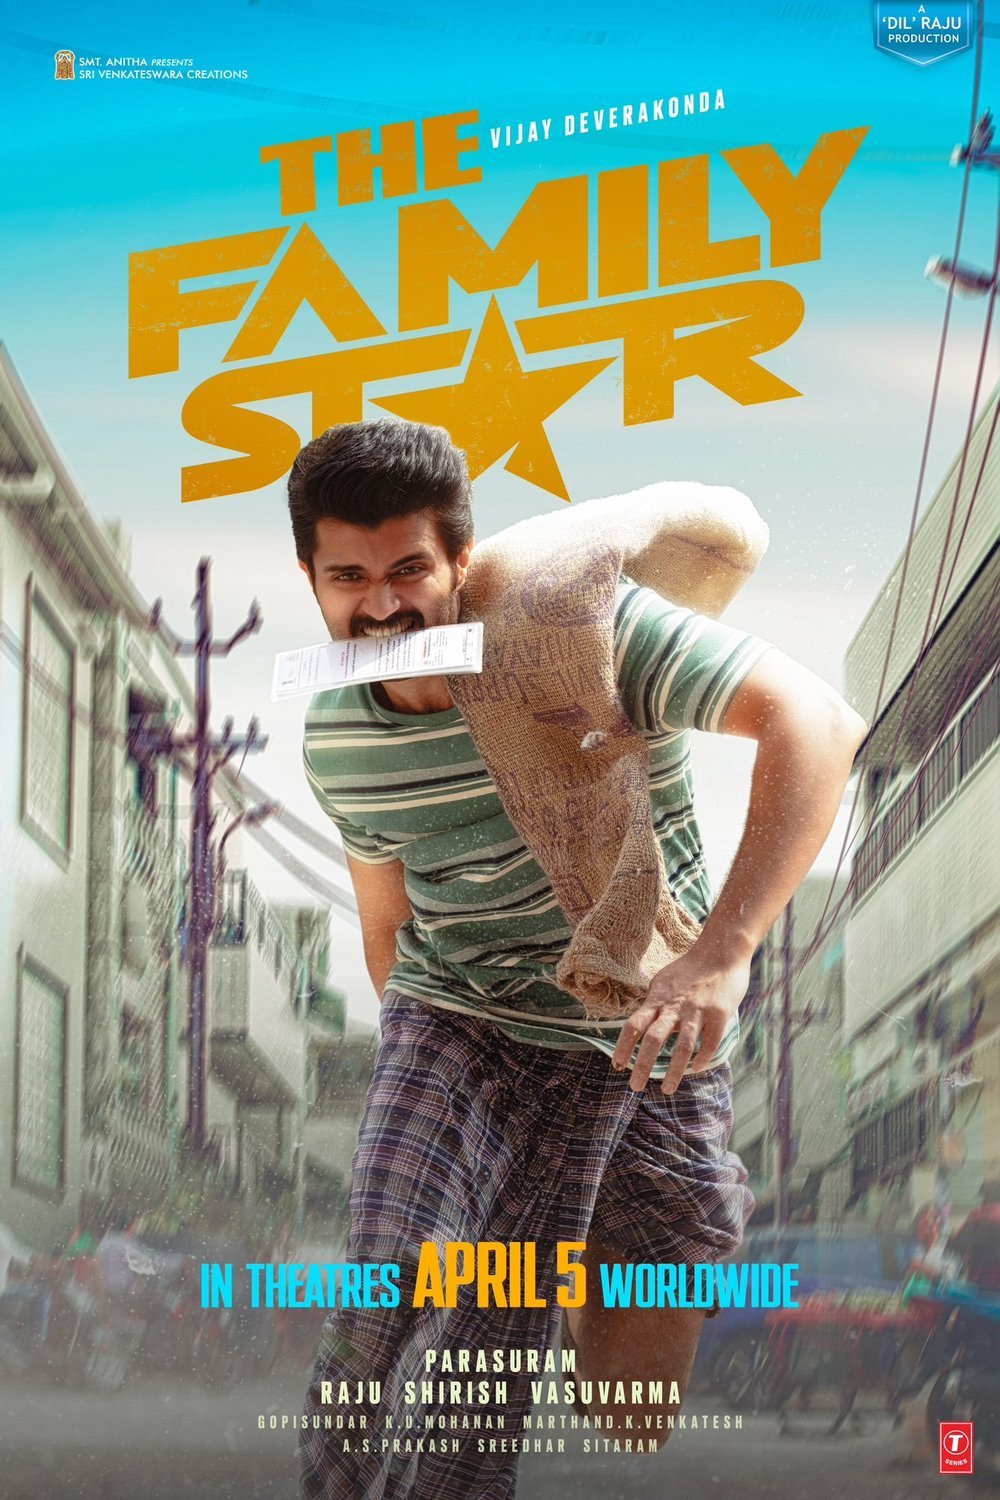 L'affiche originale du film The Family Star en Telugu